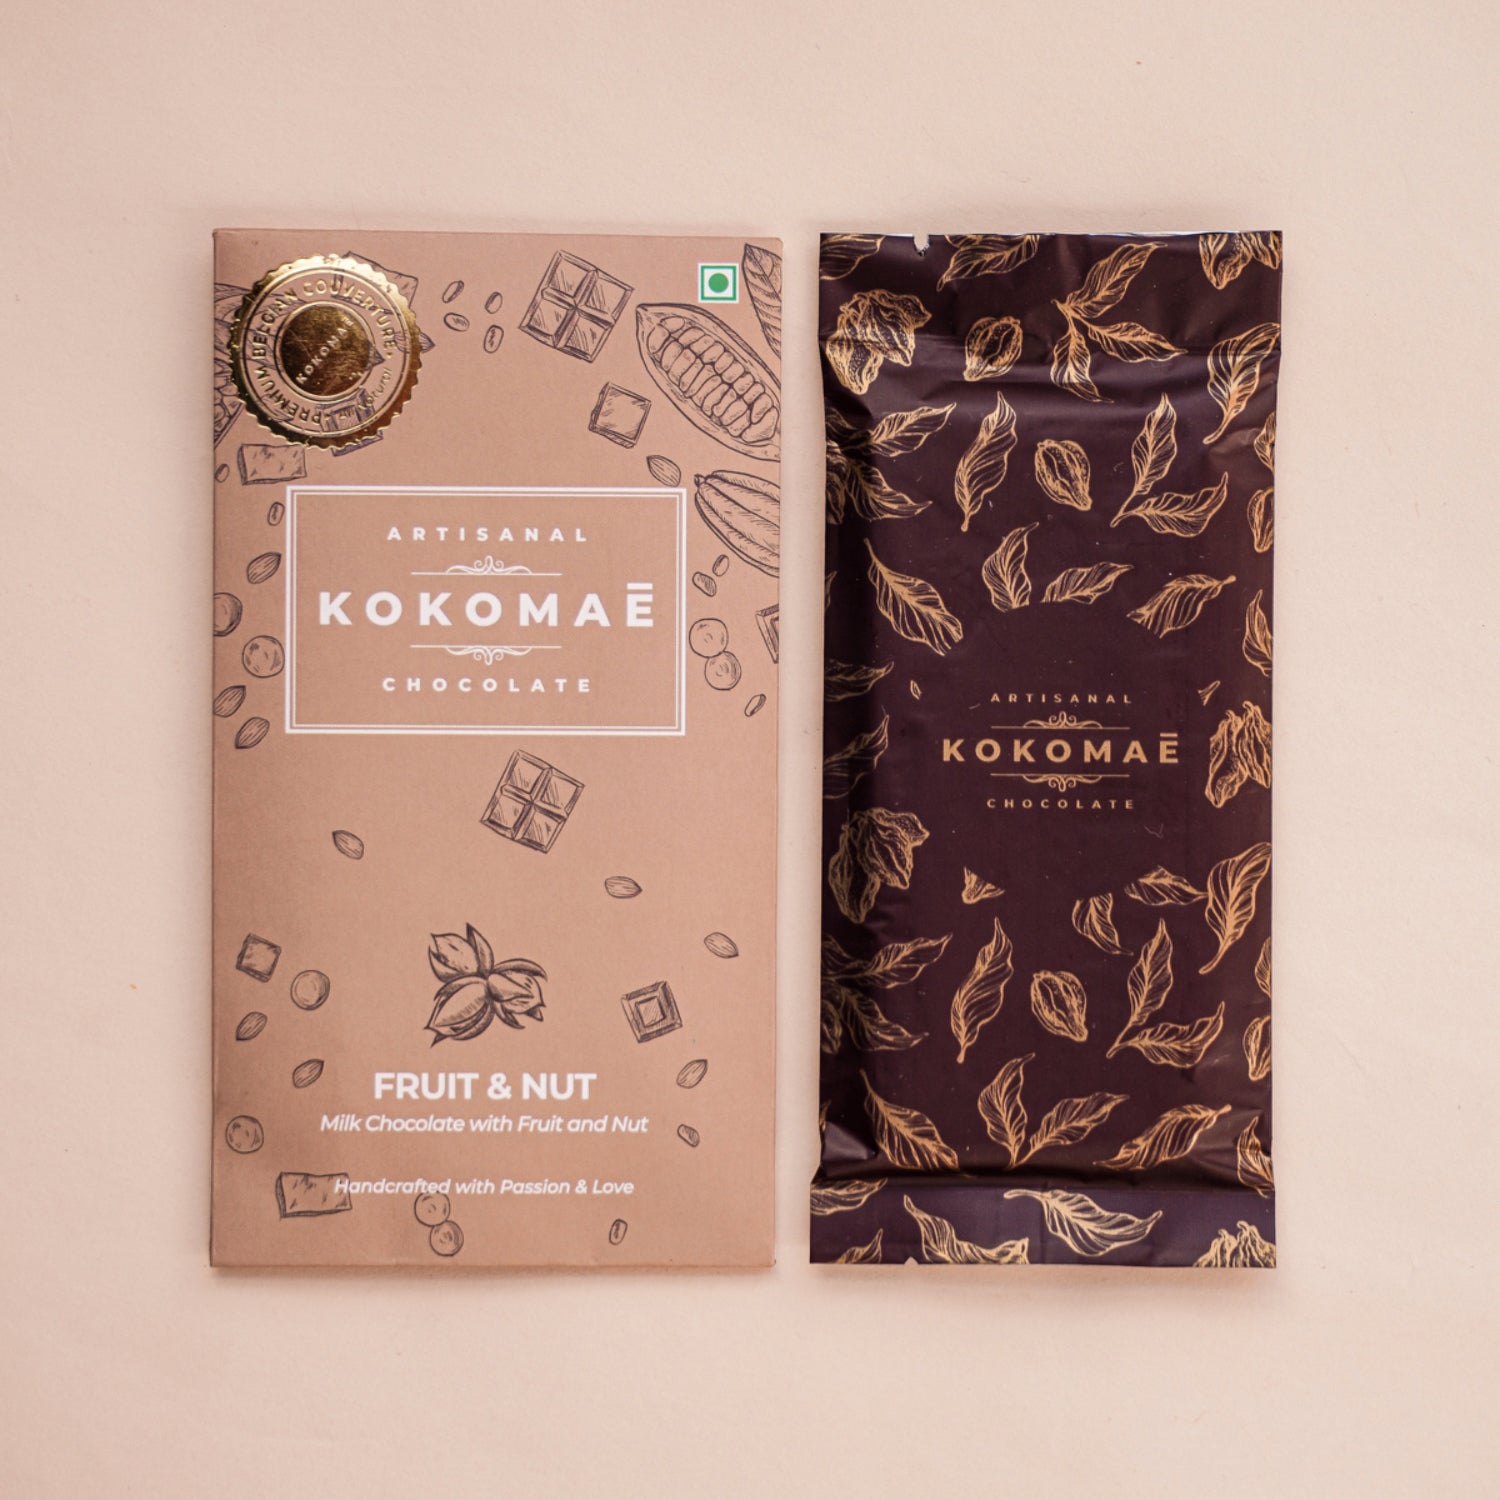 Kokomaē Artisanal Chocolate Hamper for Diwali with 4 Signature Belgian Bars & an offering